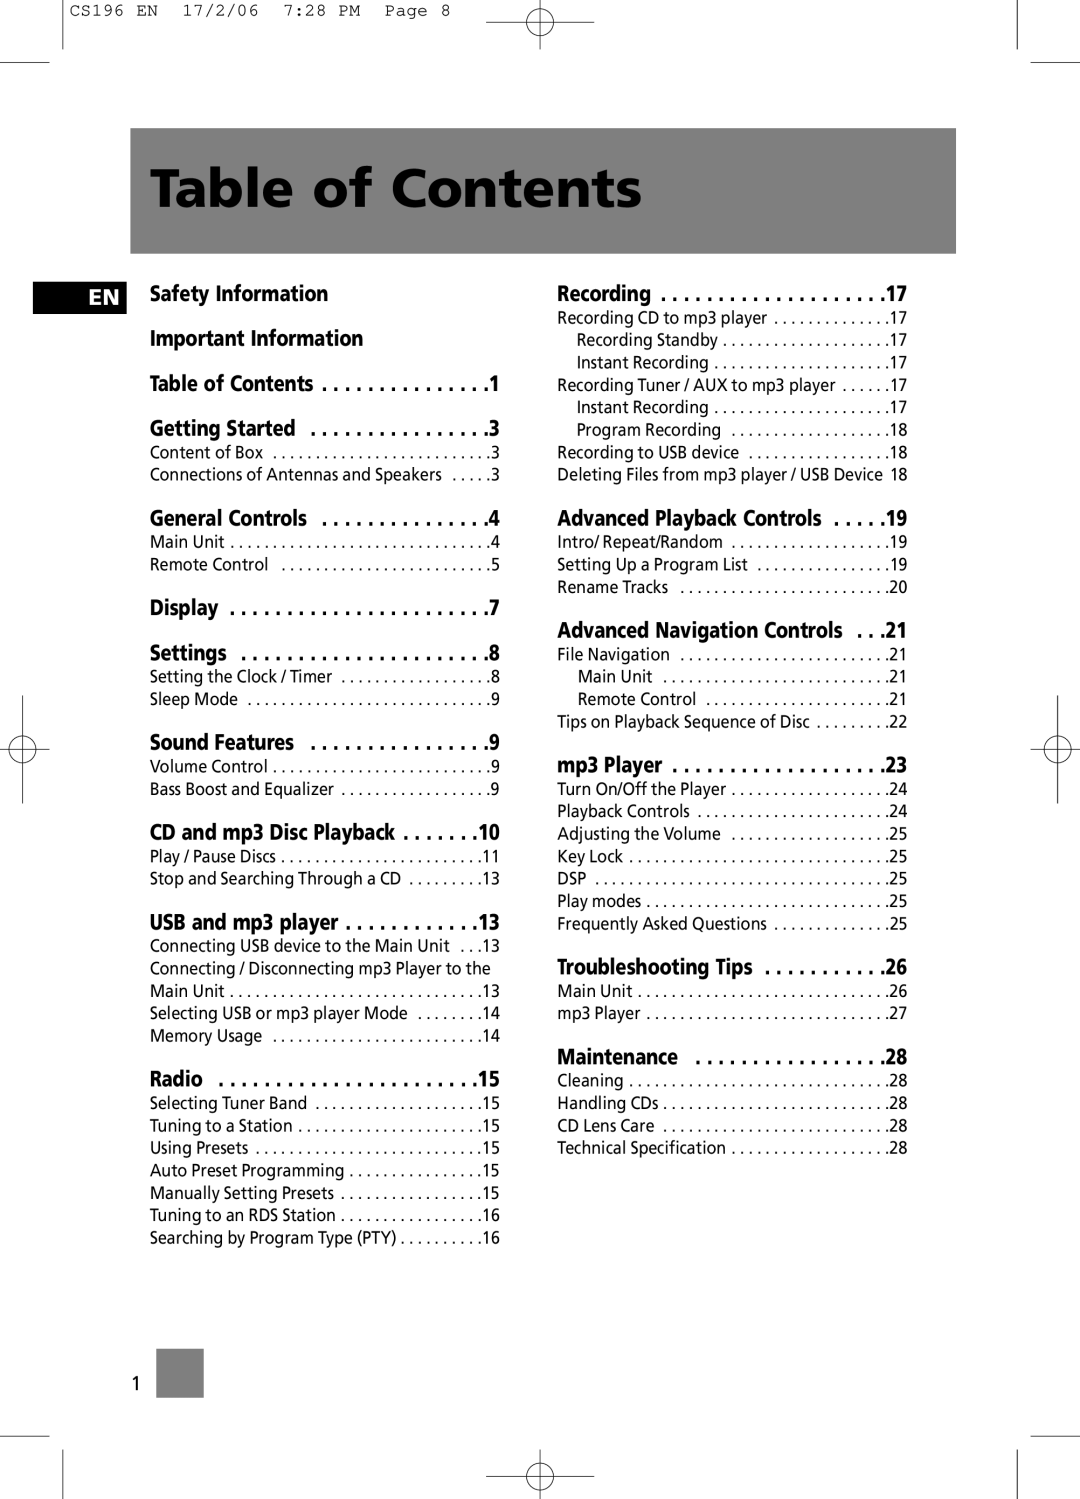 Technicolor - Thomson CS196 user manual Table of Contents 